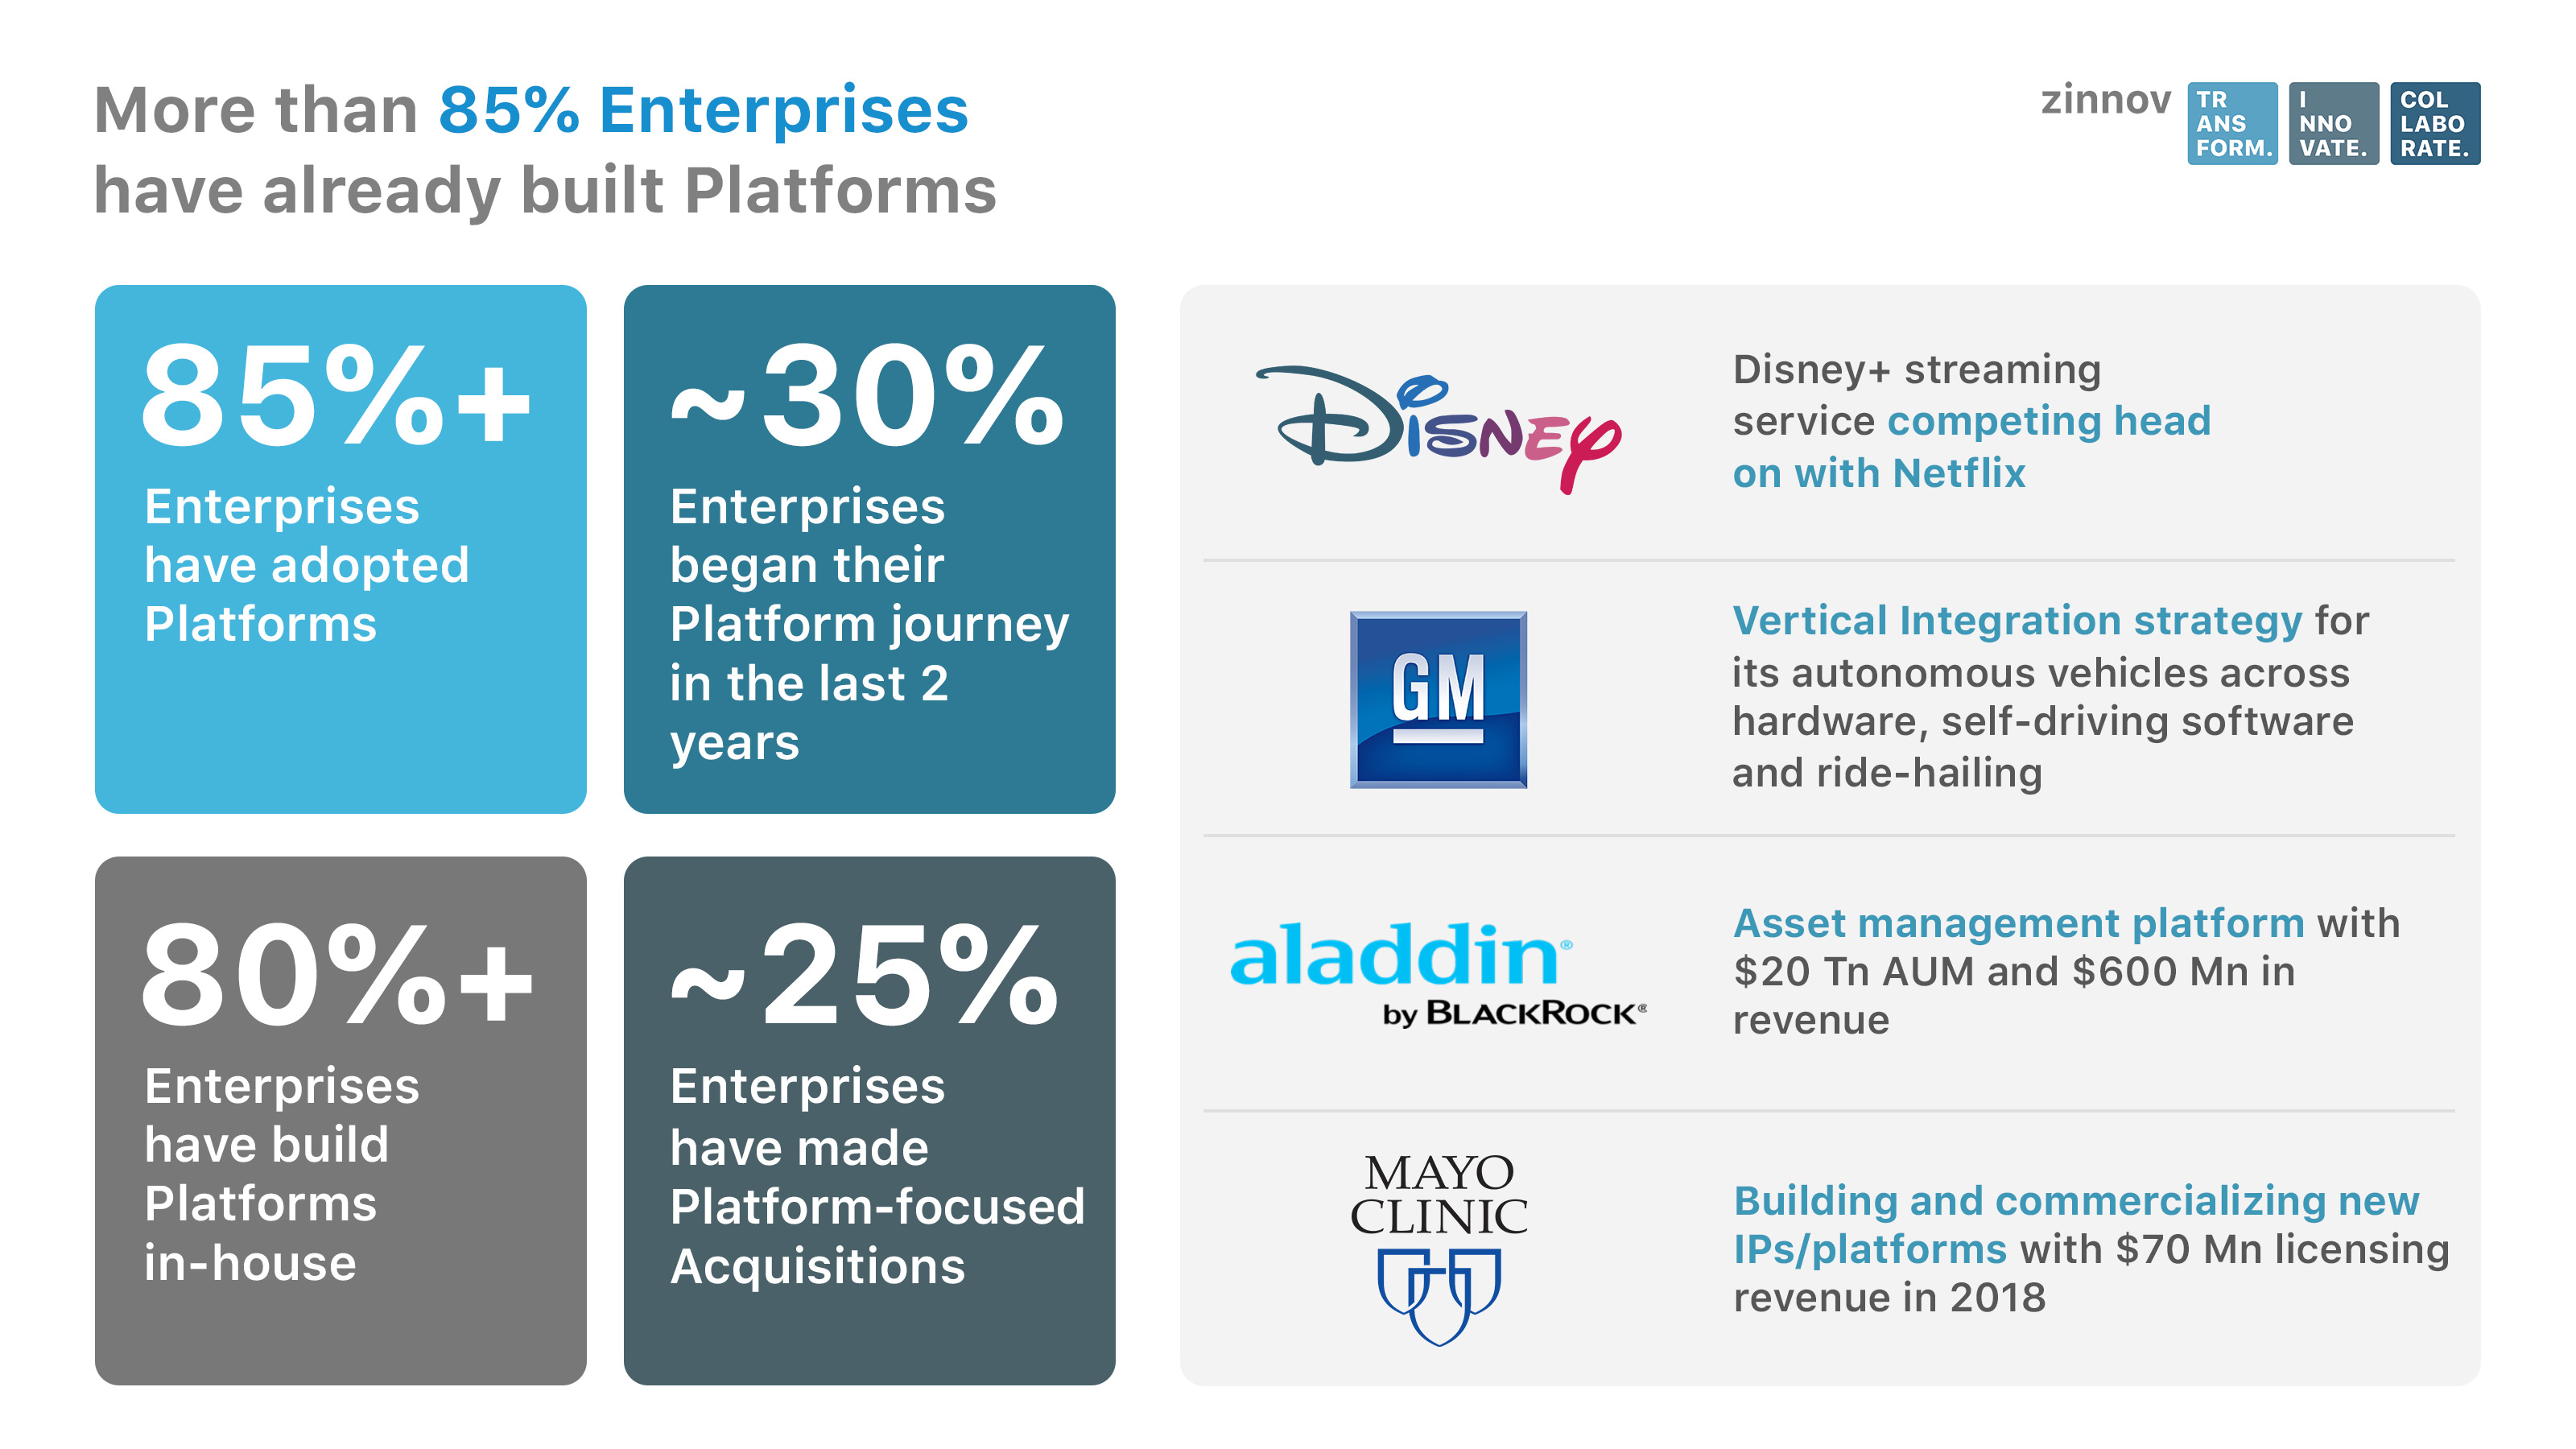 Enterprise Focus on Platforms